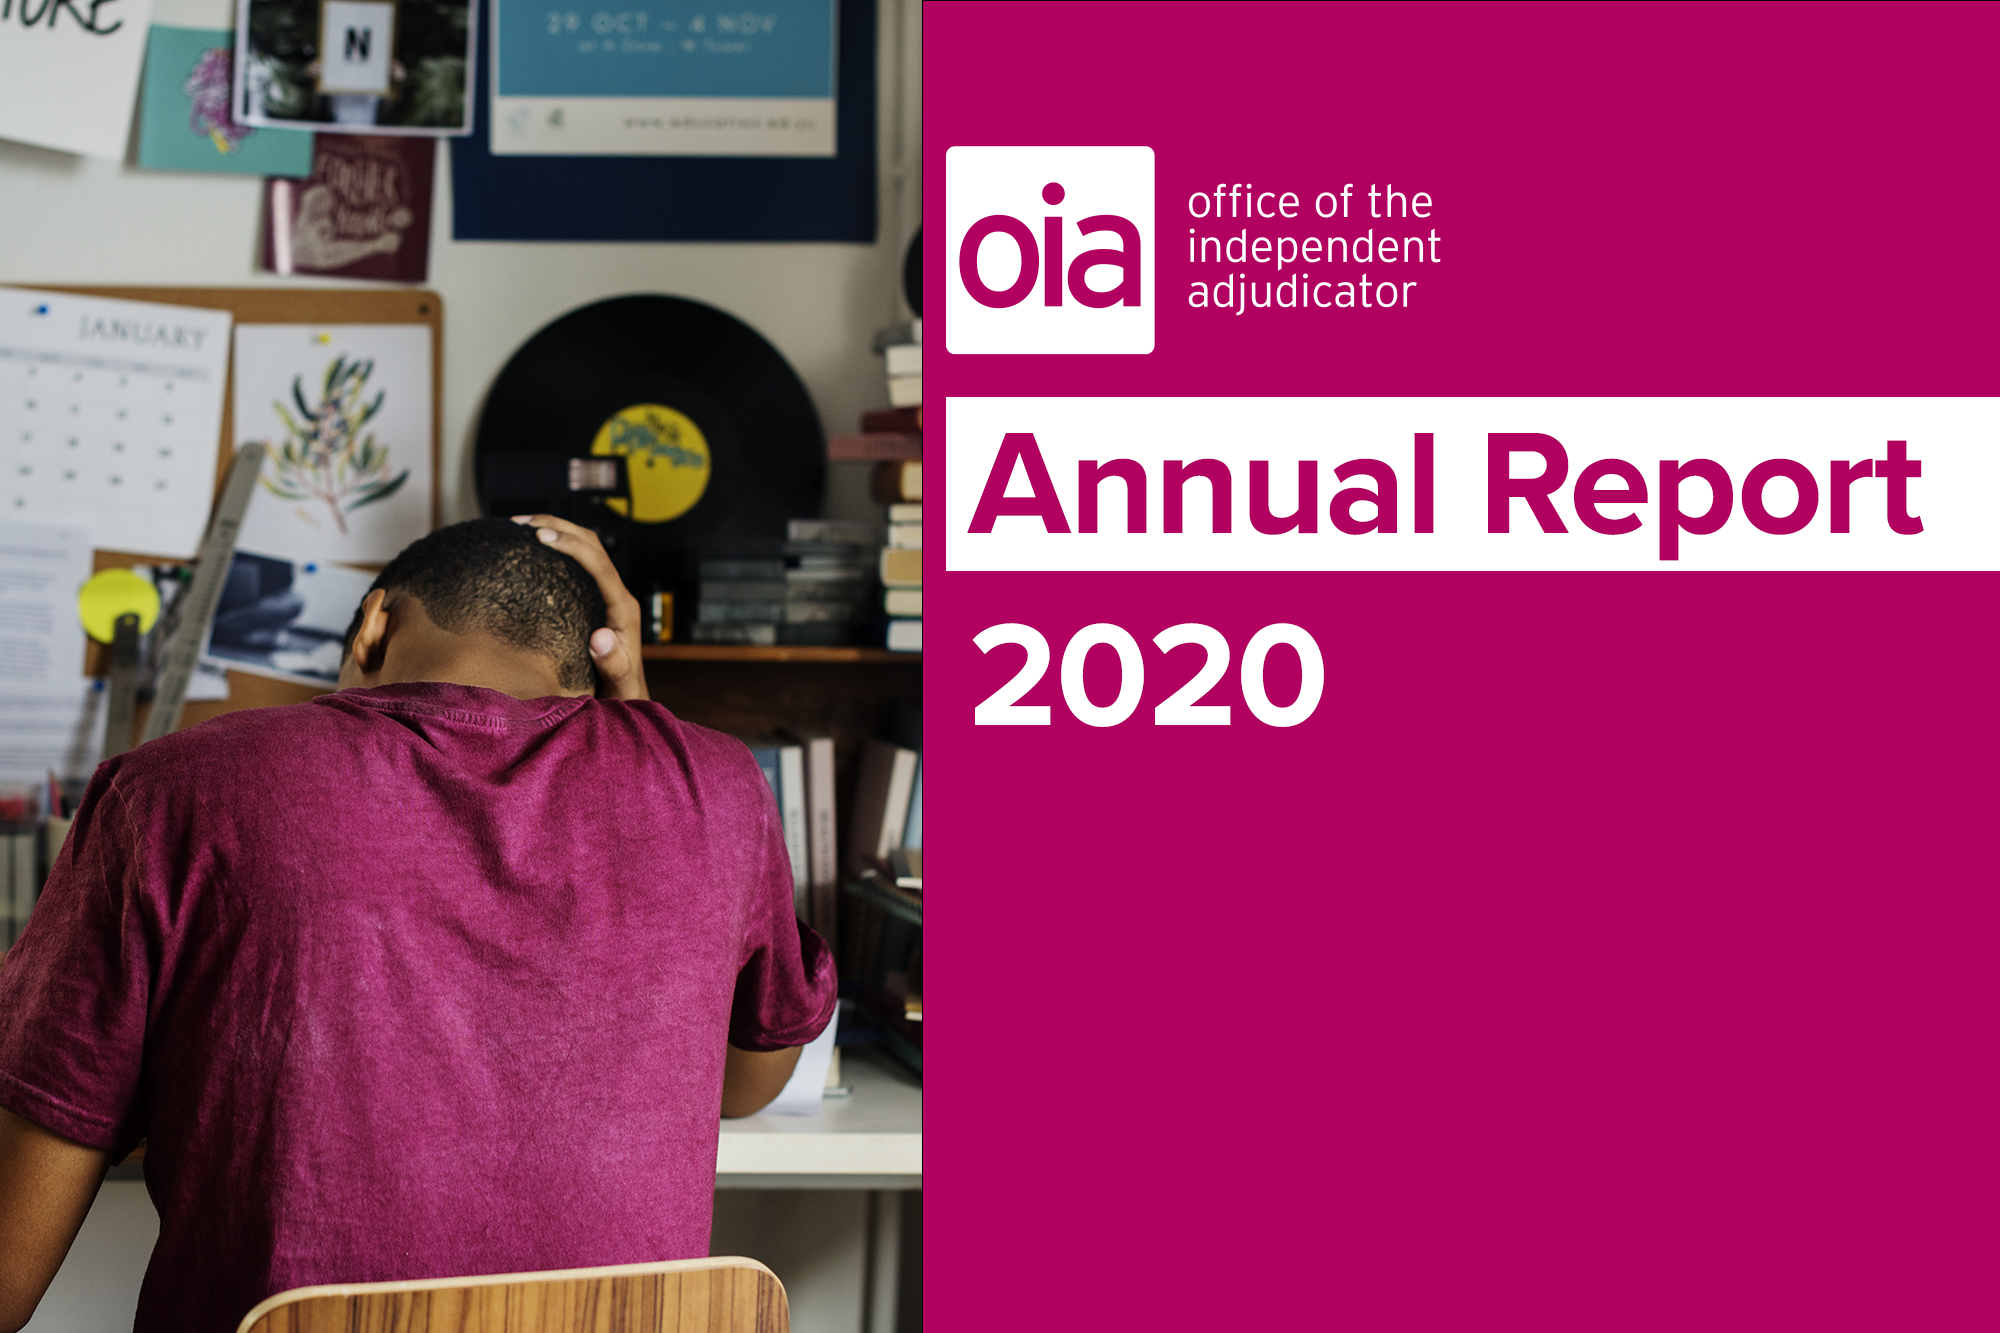 Annual Report 2020 image